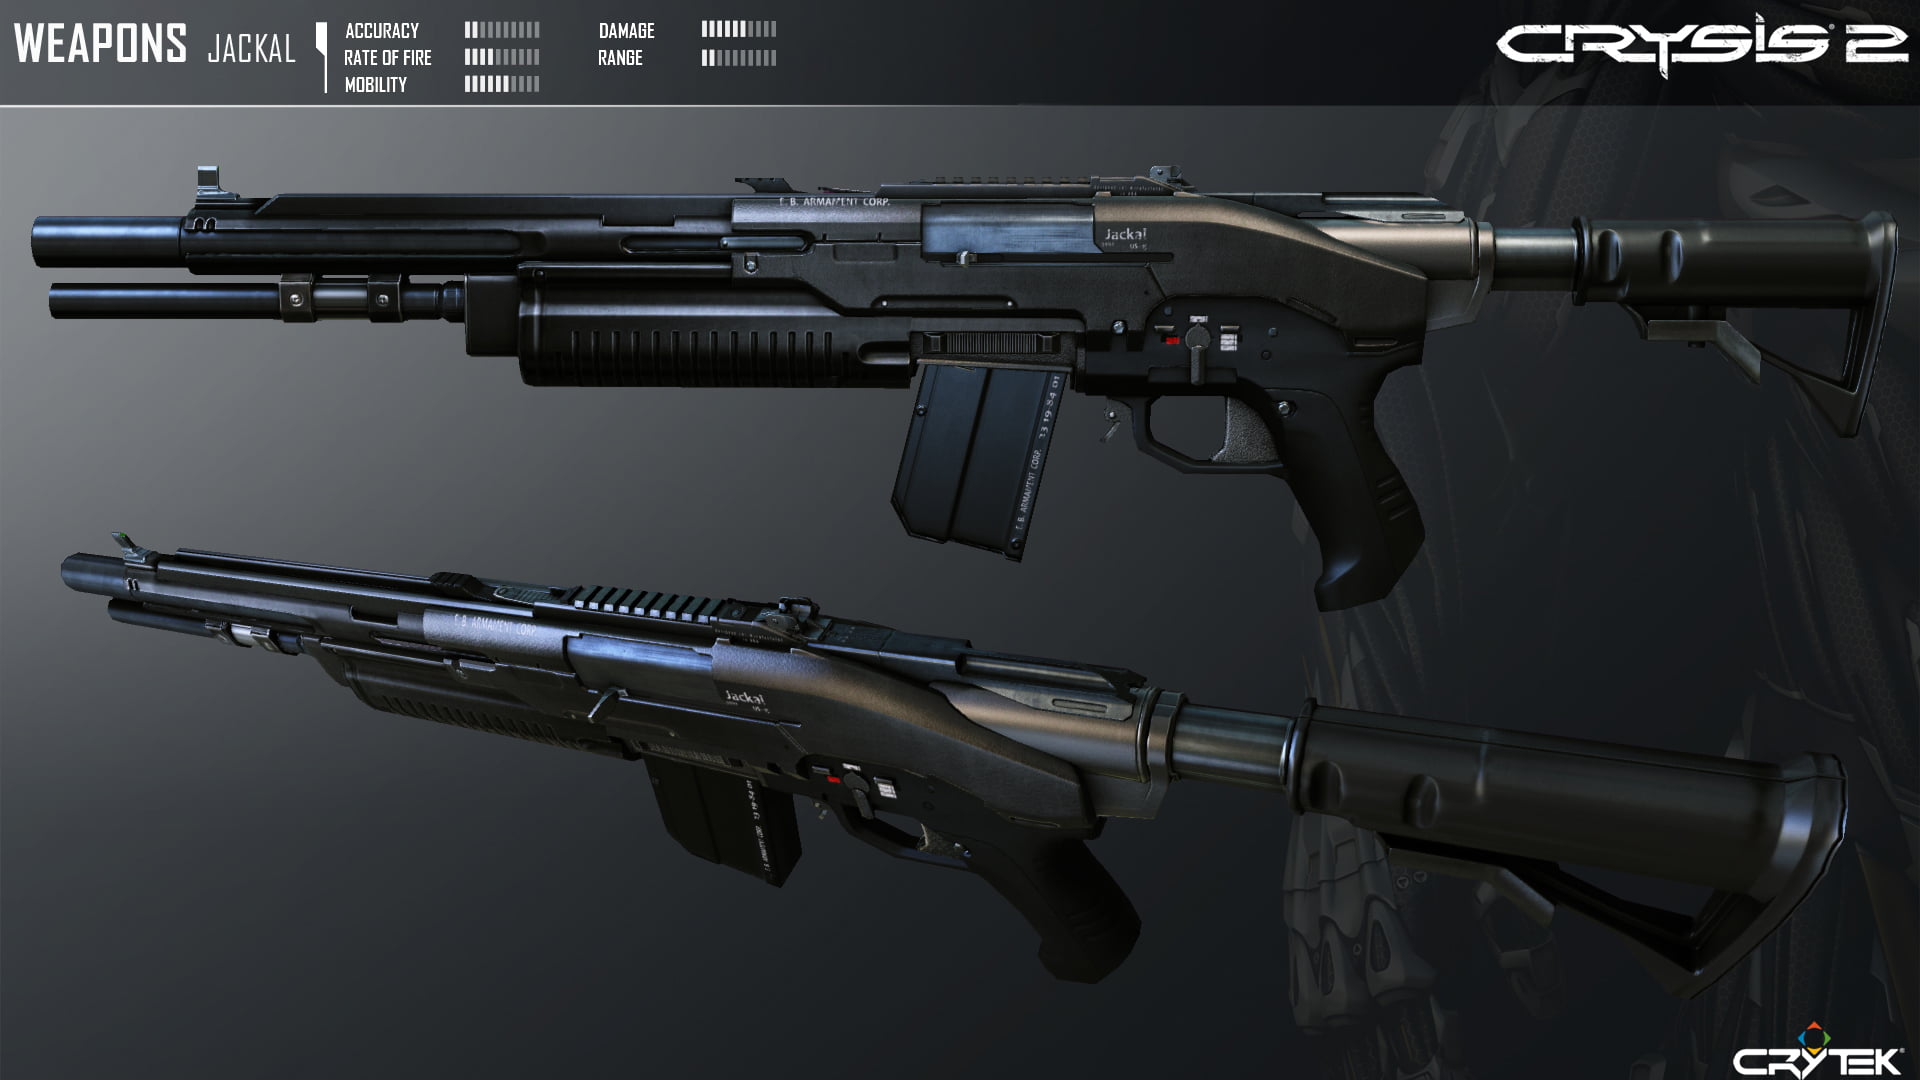 Crysis 2 Jackal weapon game application screenshot, video games, gun, Crysis, Crysis 2